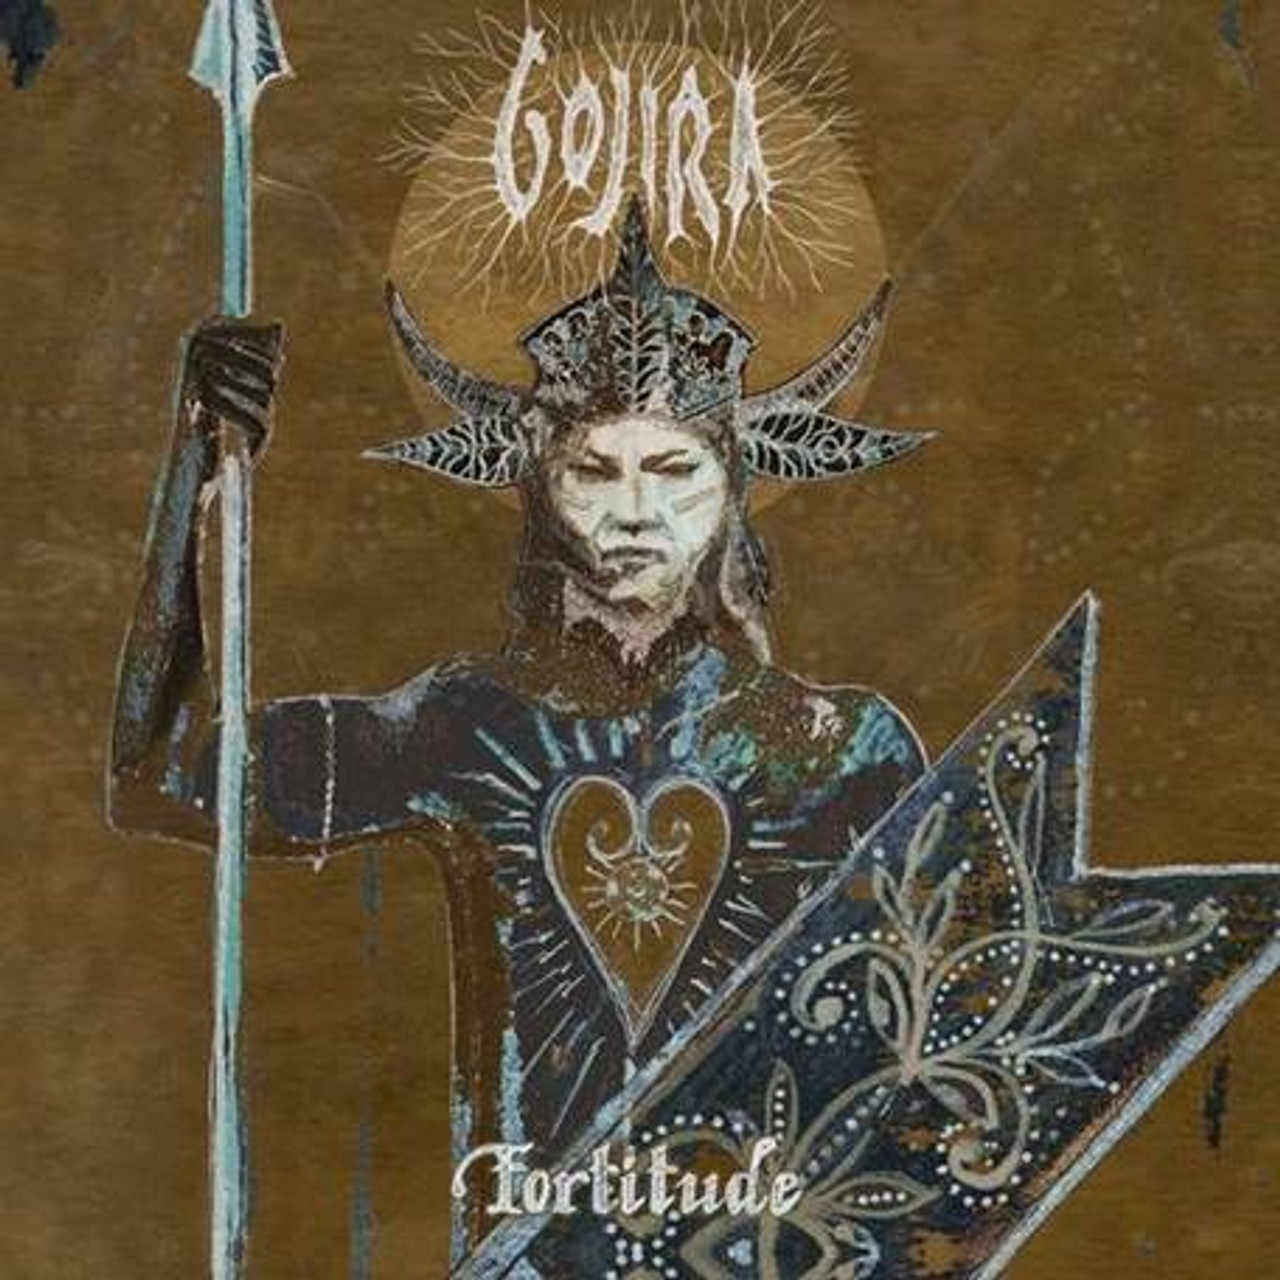 Gojira 'Fortitude' CD